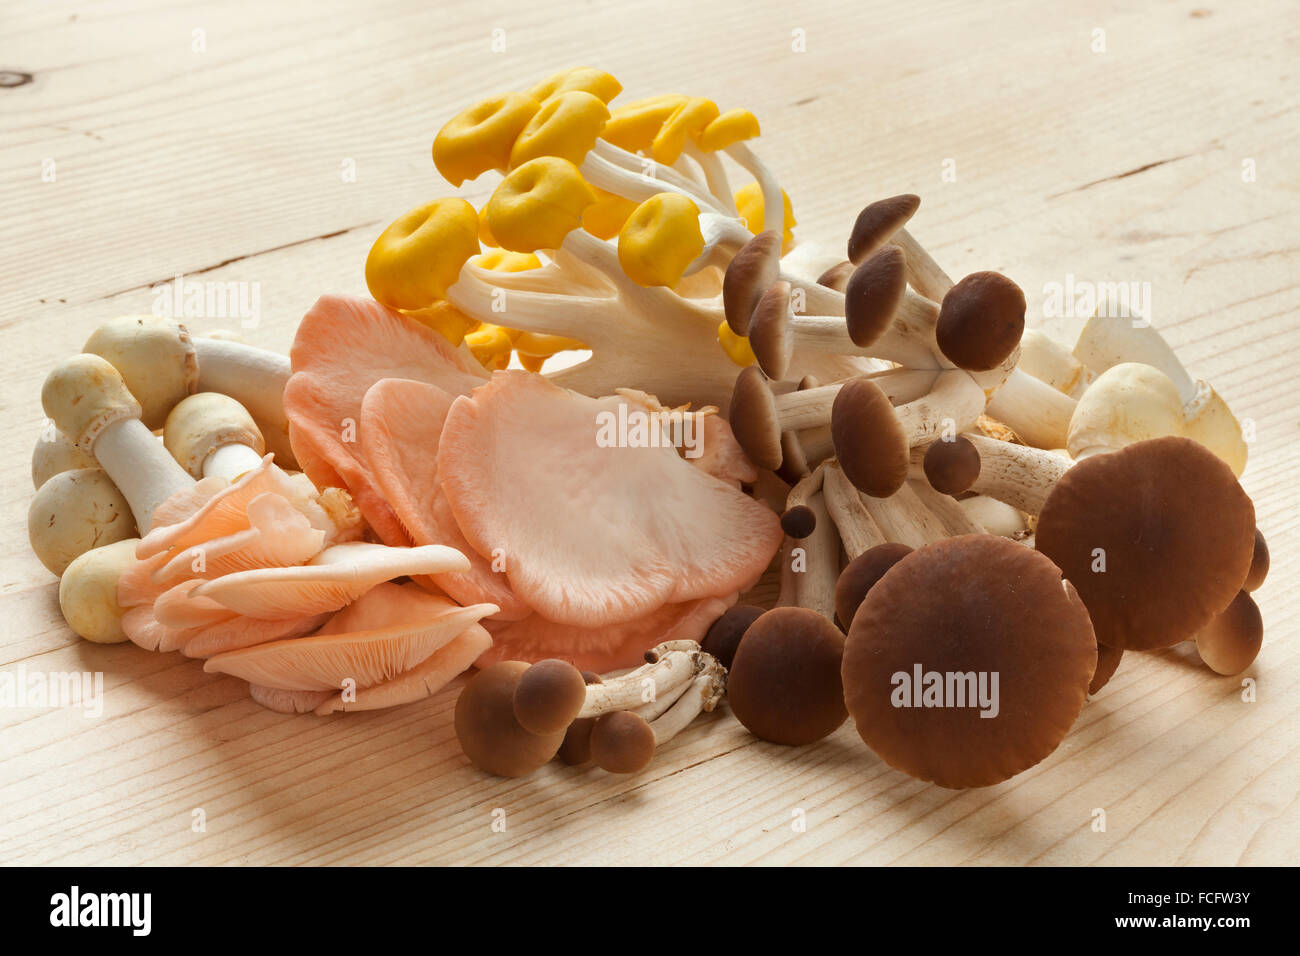 Variety of fresh raw edible mushrooms, oyster mushrooms,horse mushrooms and pioppino mushrooms Stock Photo